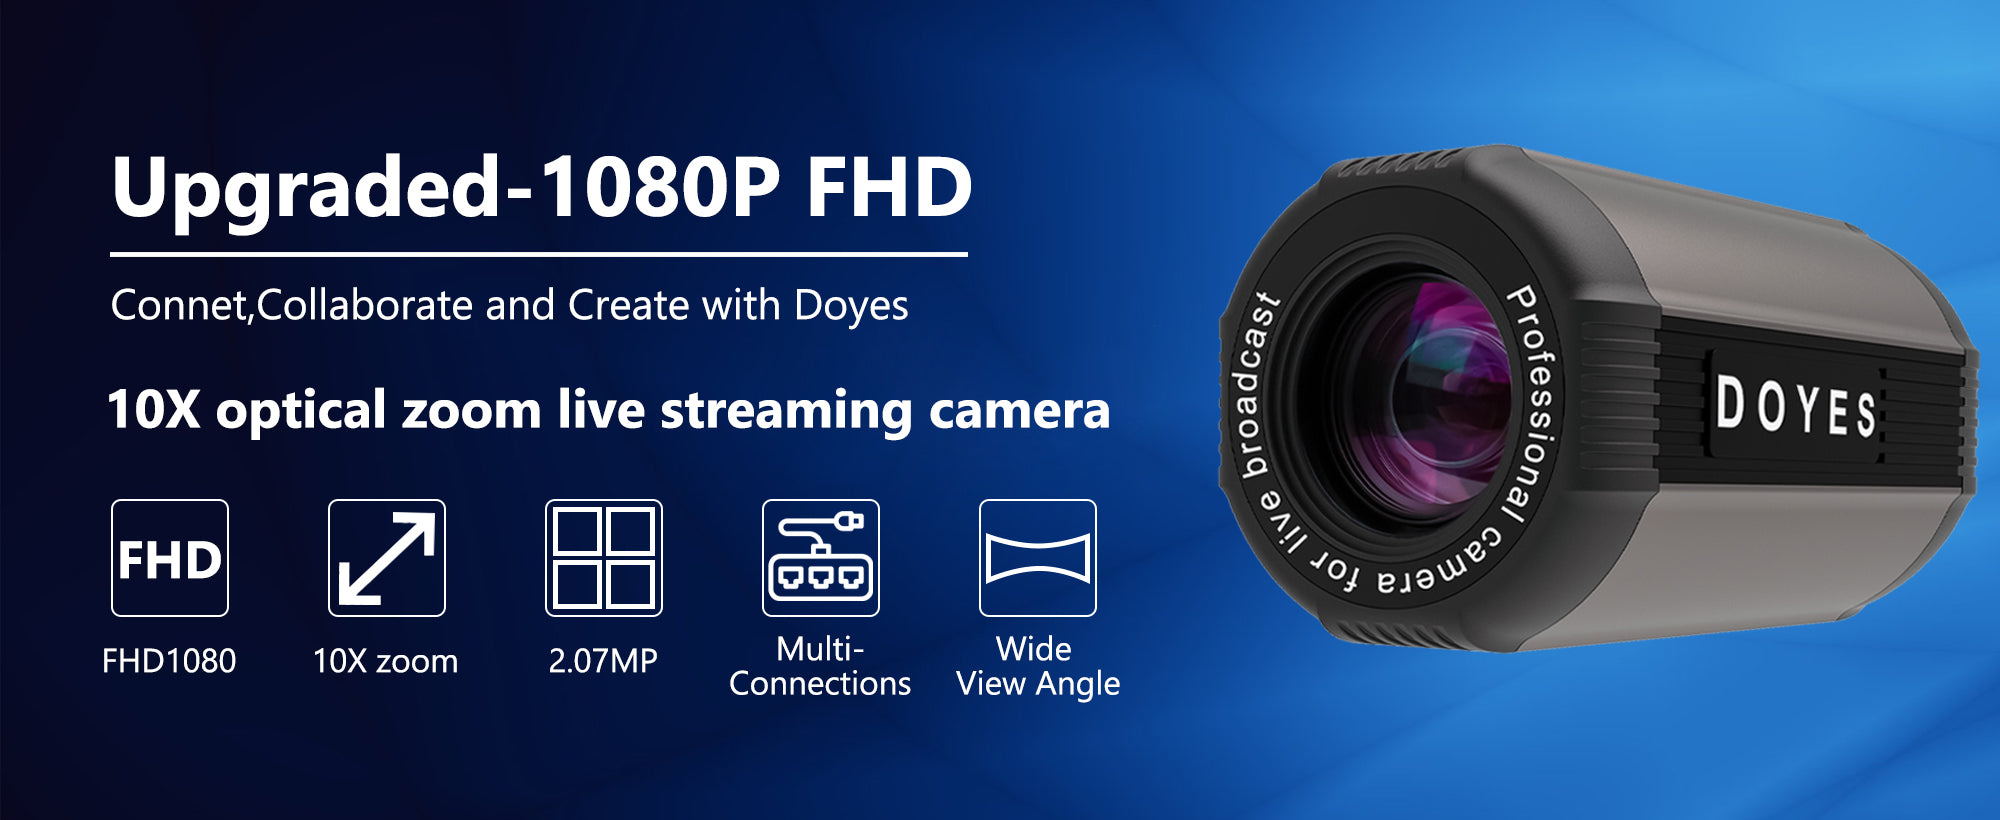 Doyes 10x optical zoom live streaming camera